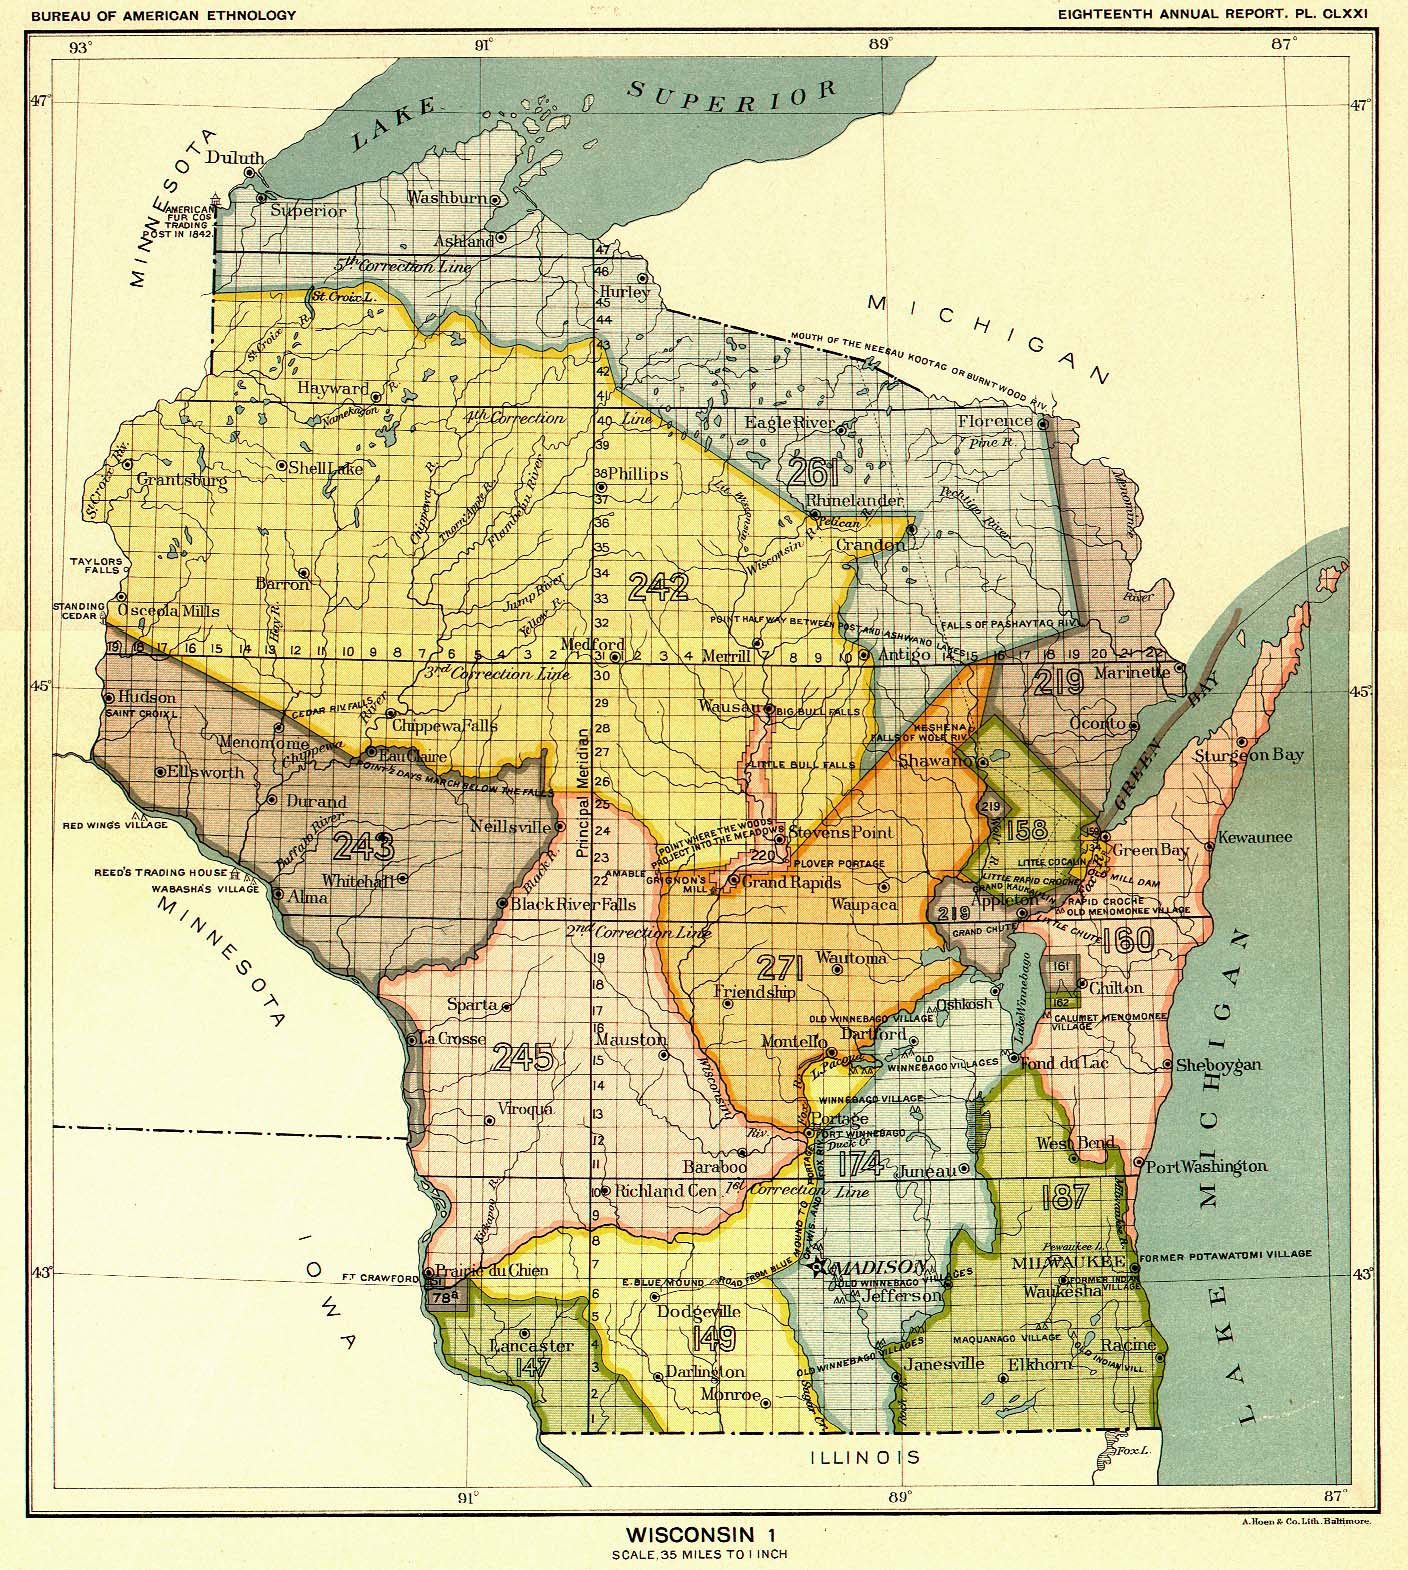 Wisconsin 1, Map 64